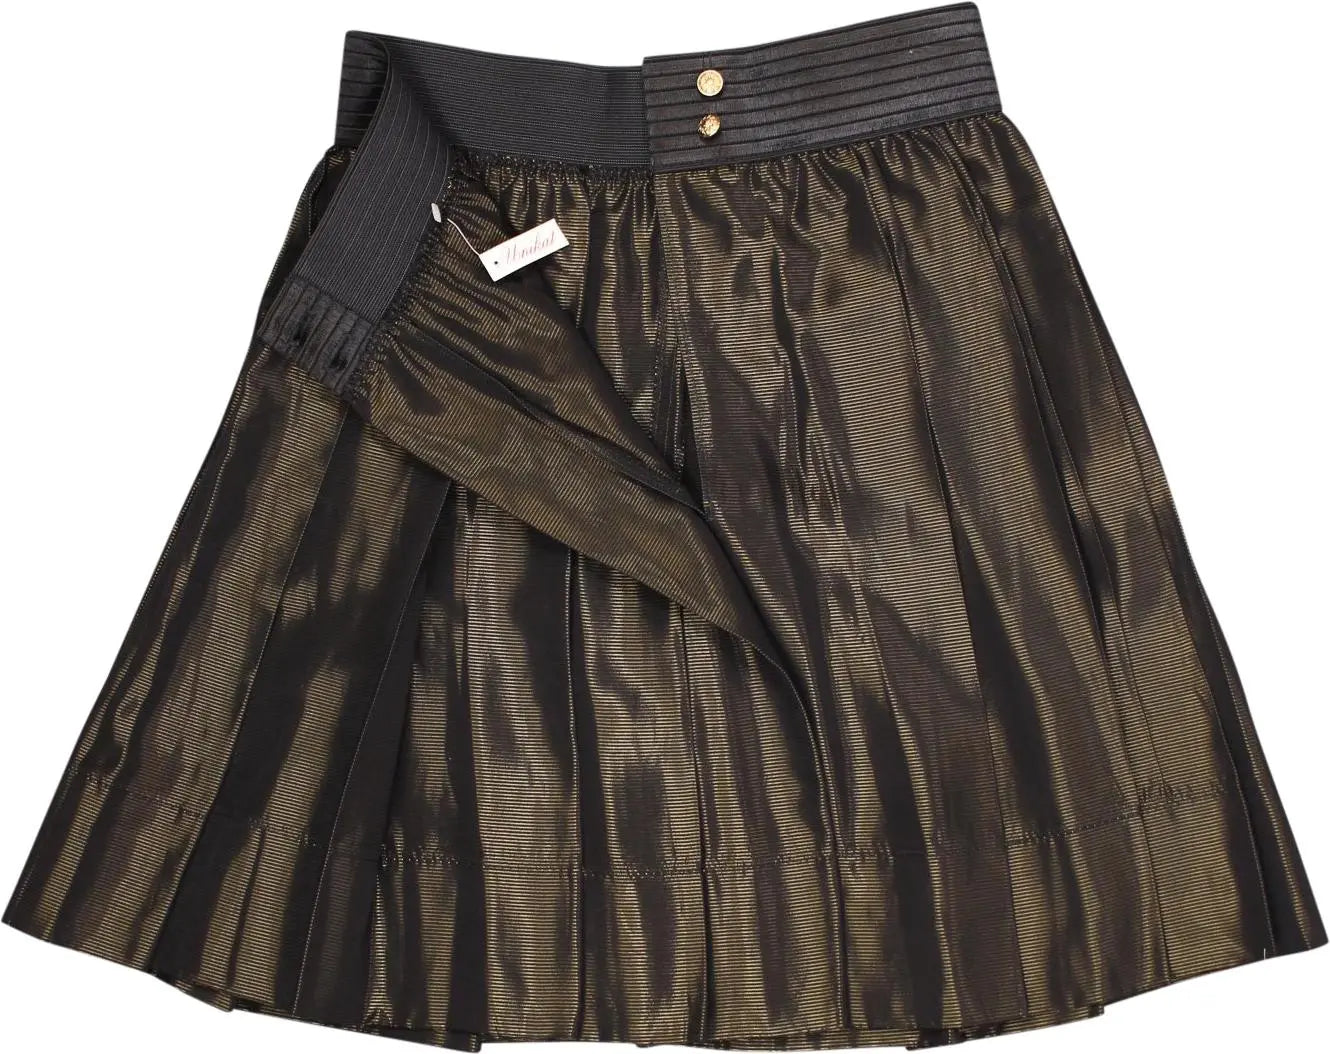 Unikat - Gold Skater Skirt- ThriftTale.com - Vintage and second handclothing